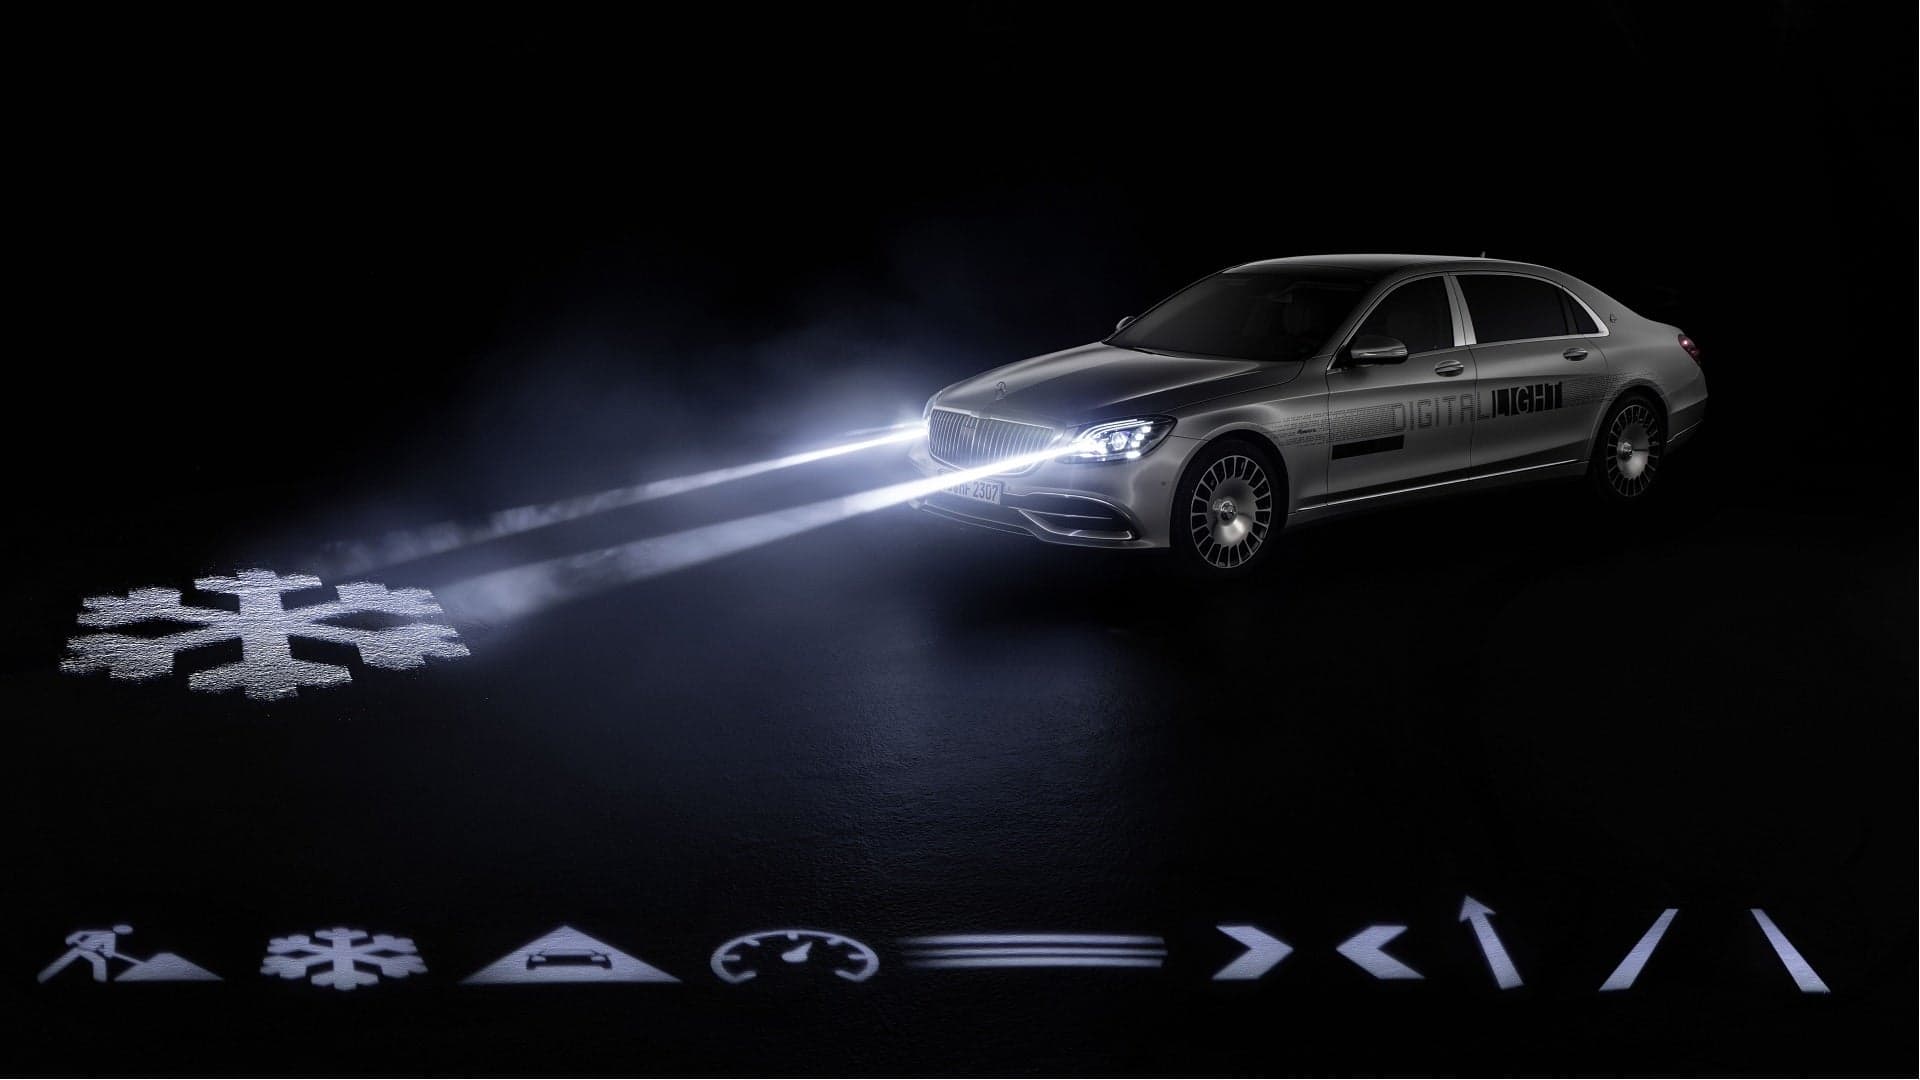 Mercedes Shows Off New Digital Headlights